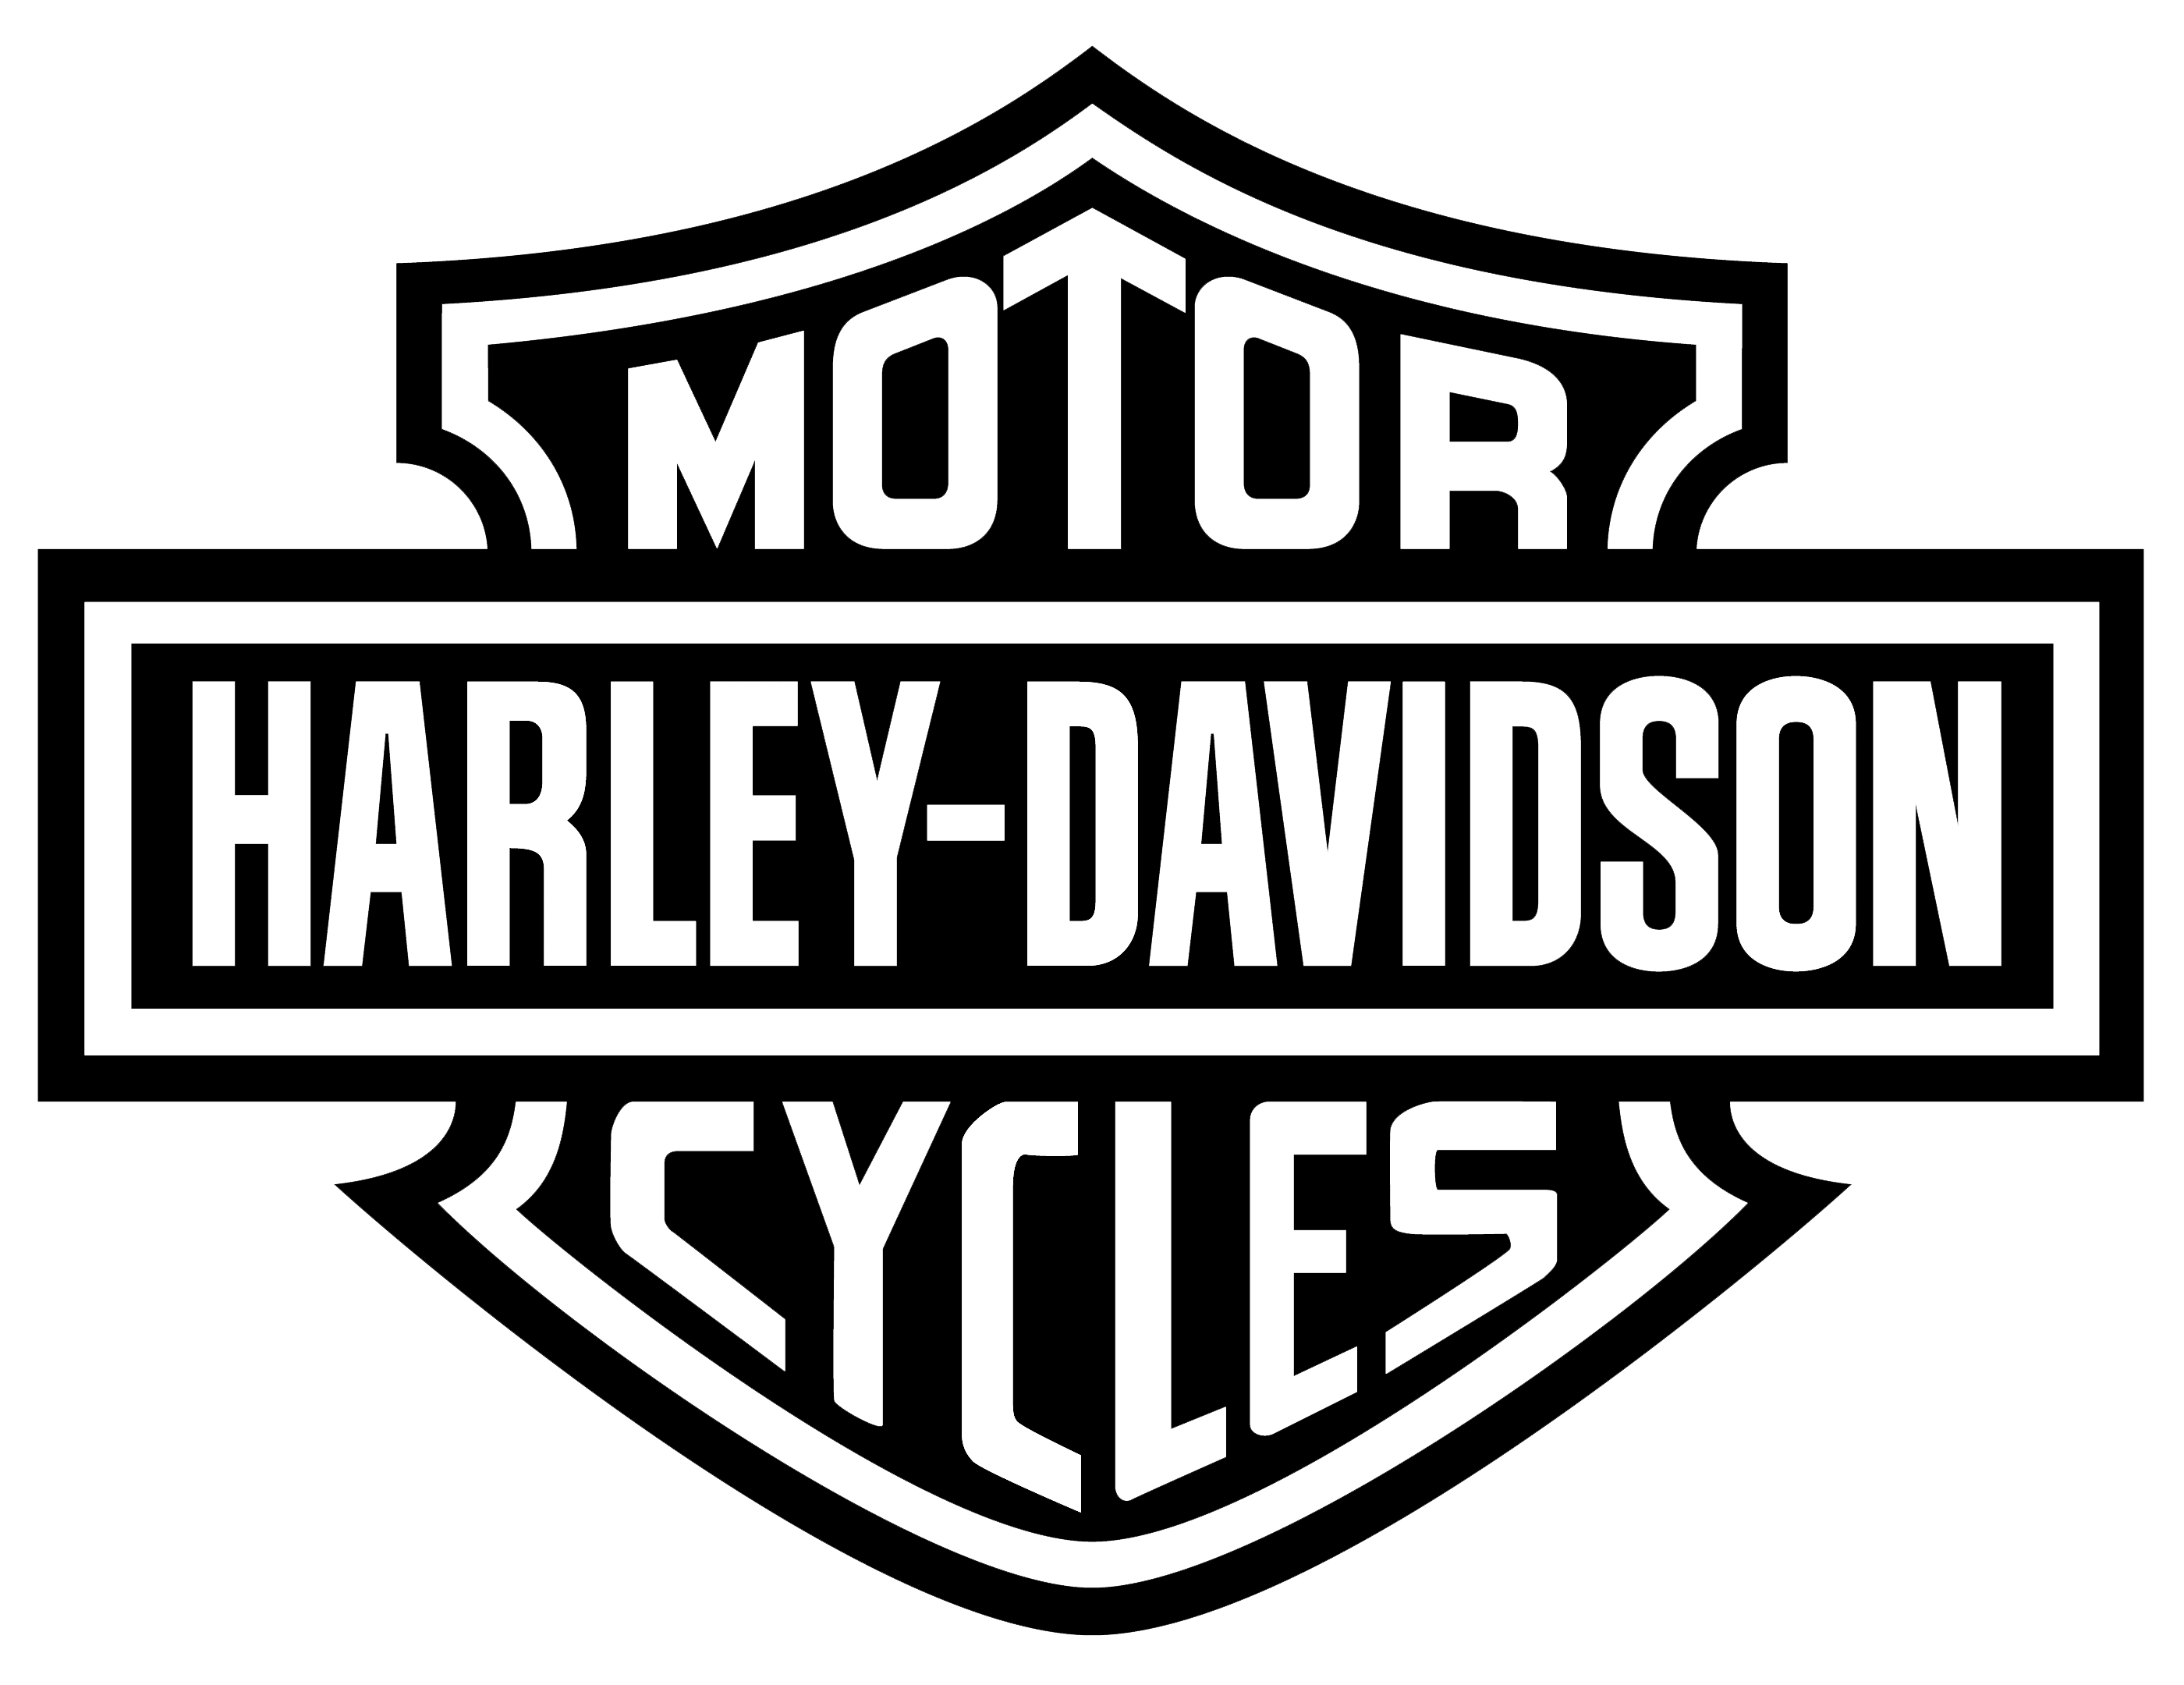 Black and White Product Logo - Harley-Davidson logo | Motorcycle Brands